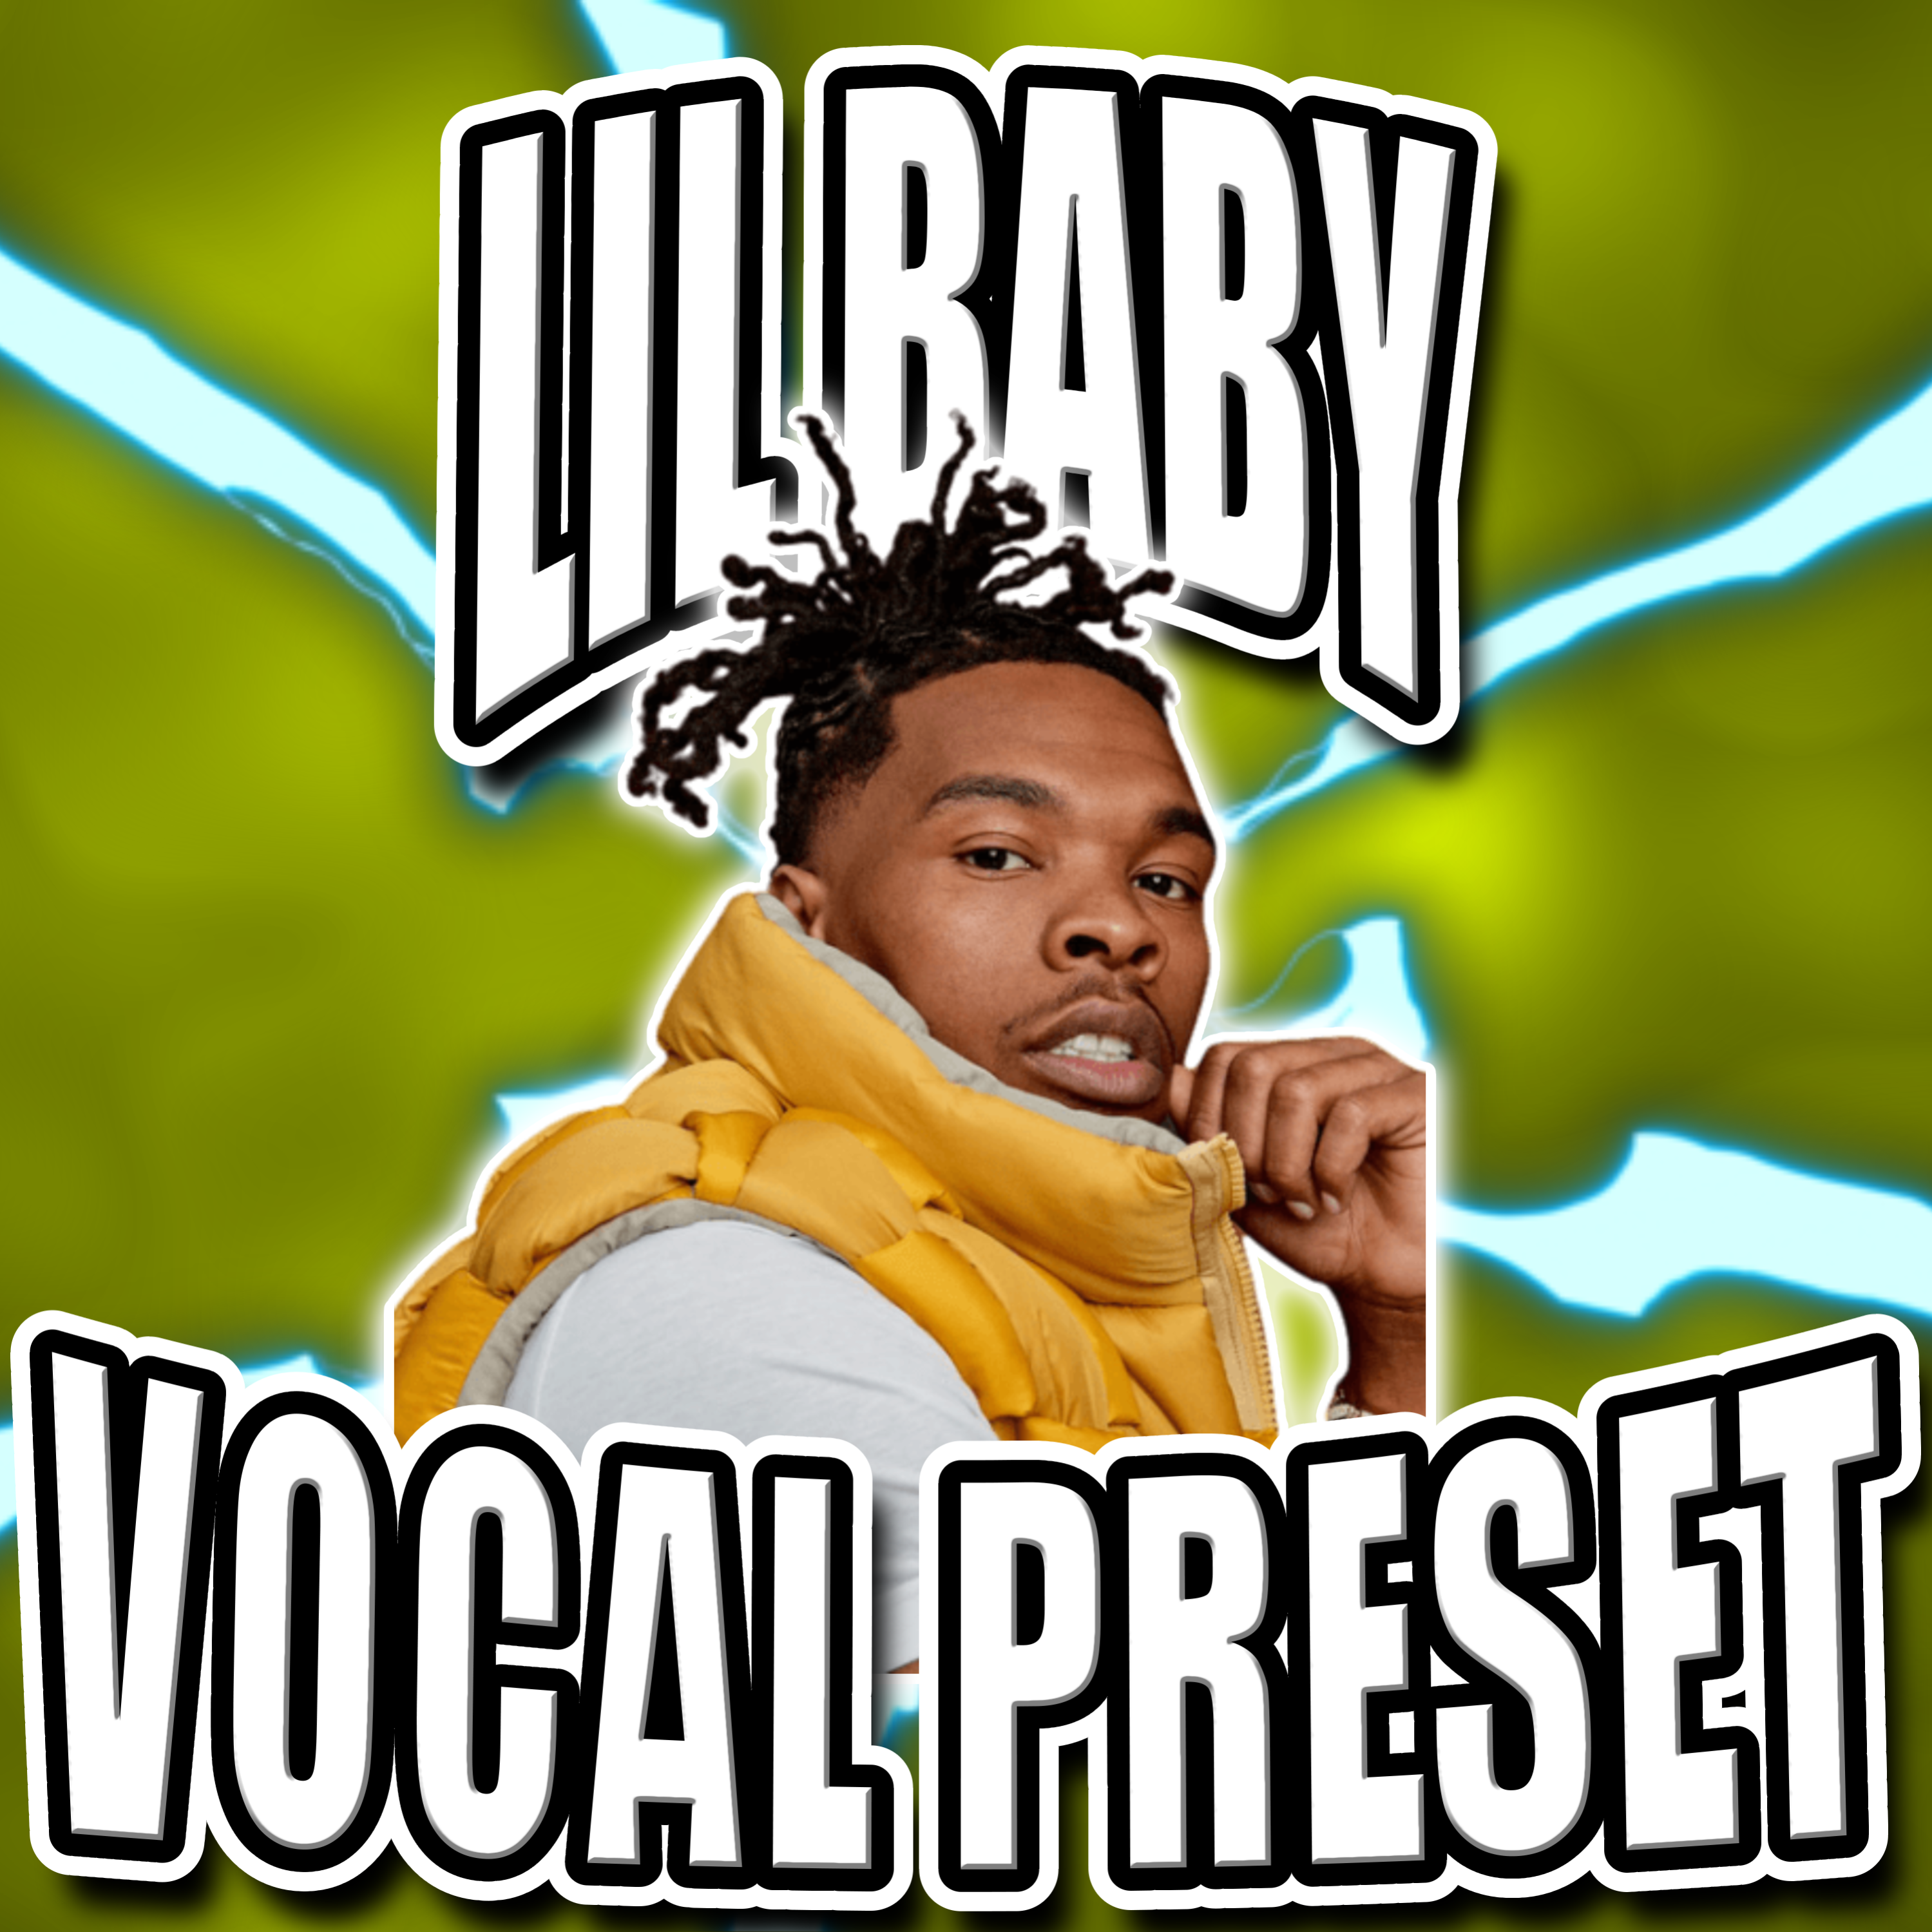 Lil Baby Vocal Preset